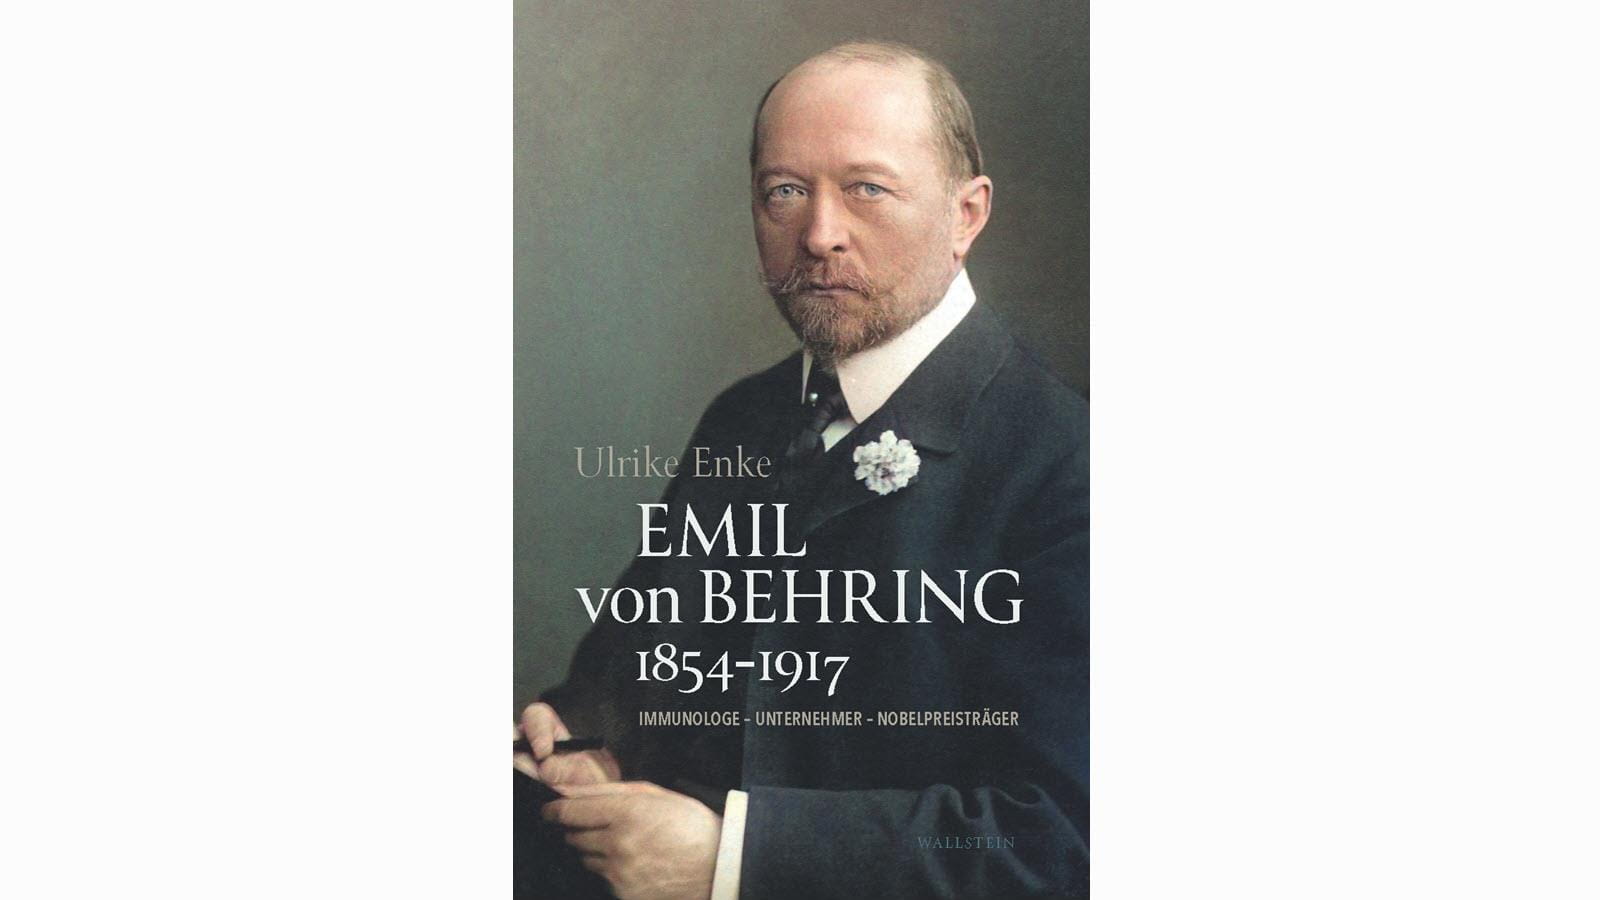 Emil von Behring biography by Ulrike Enke